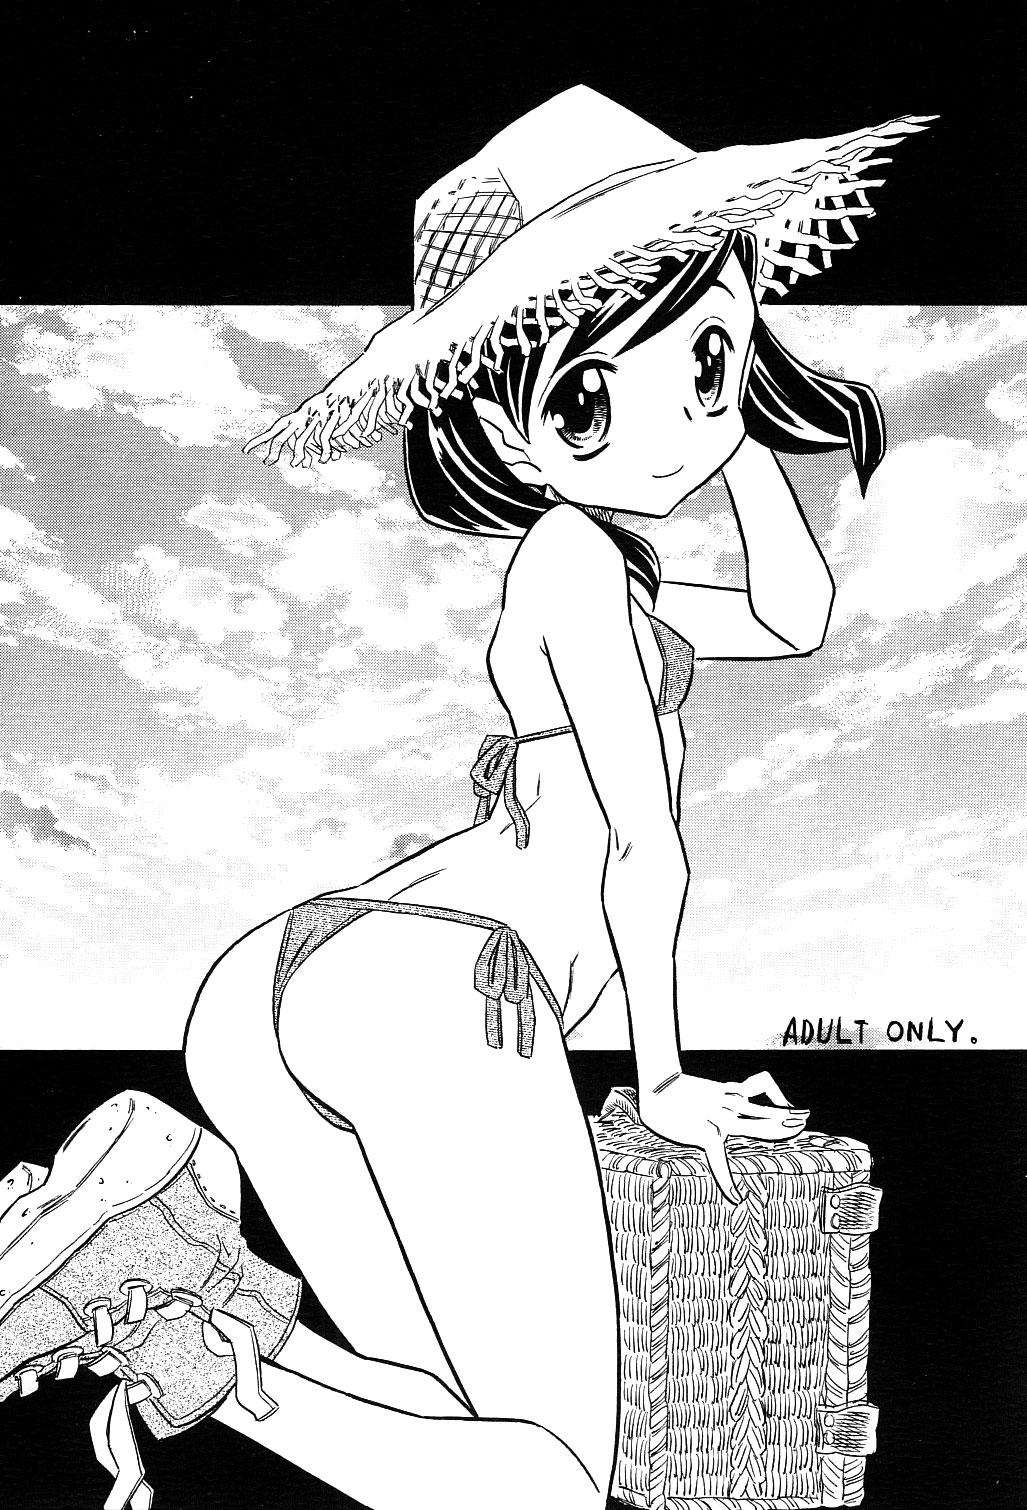 Female Ero Manga Artist Scorned 12